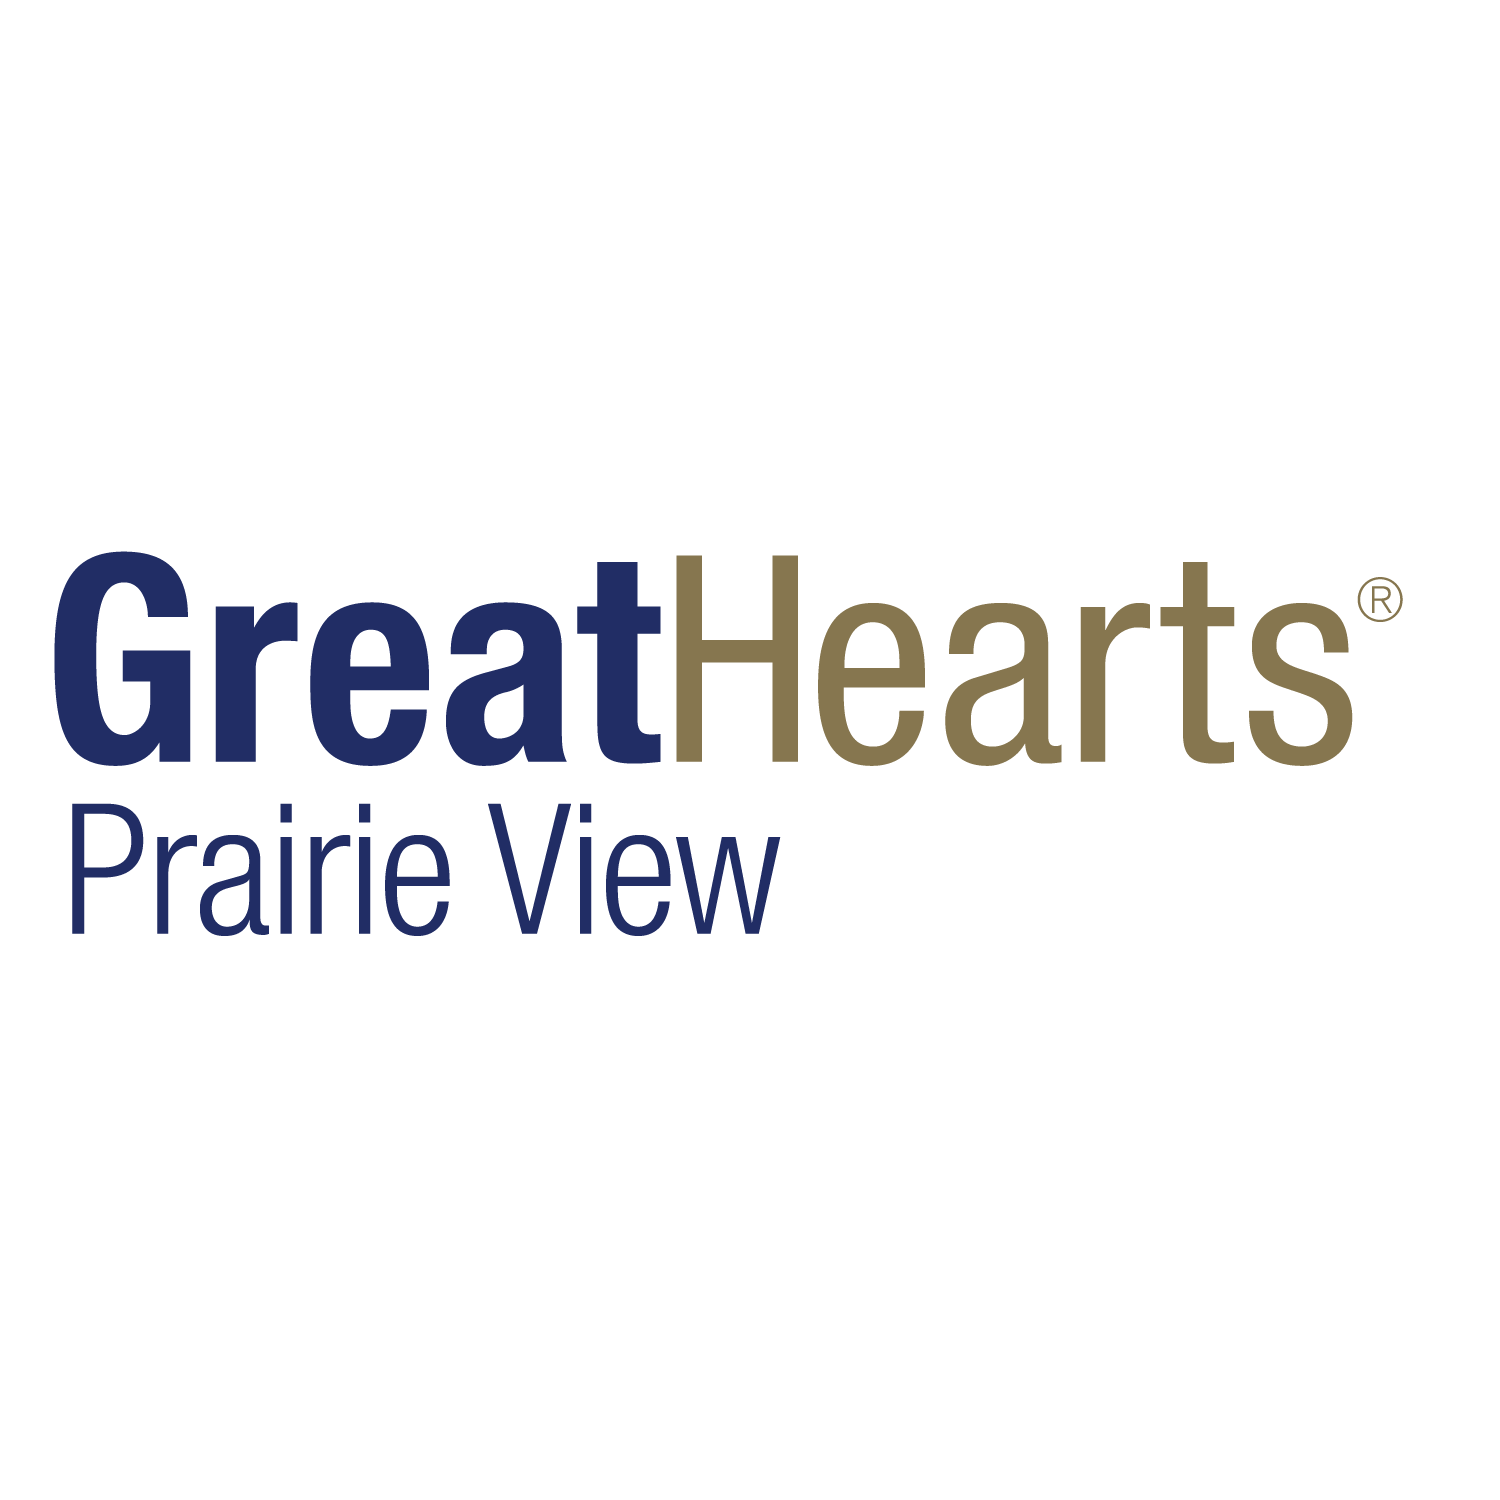 Great Hearts Prairie View